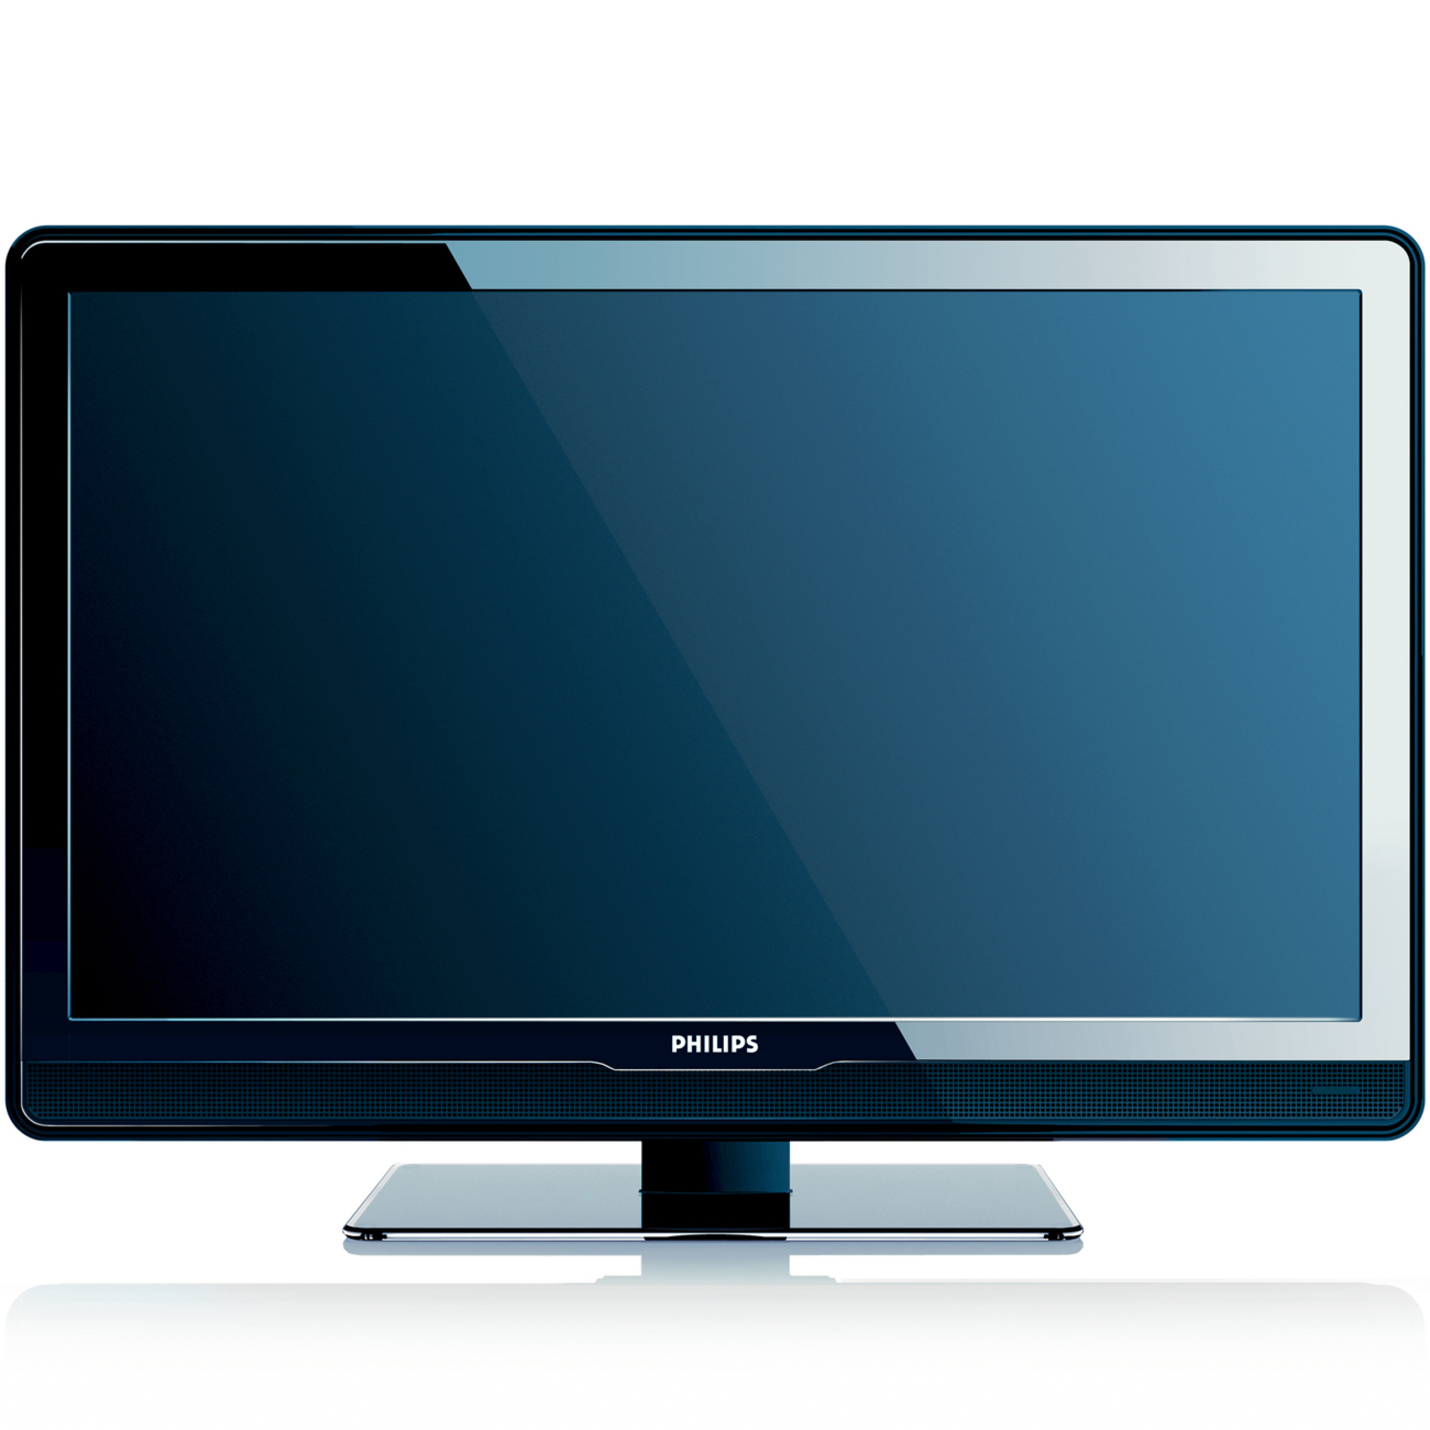 Philips 52" Class HDTV (1080p) LCD TV (52PFL3603D) - image 1 of 3